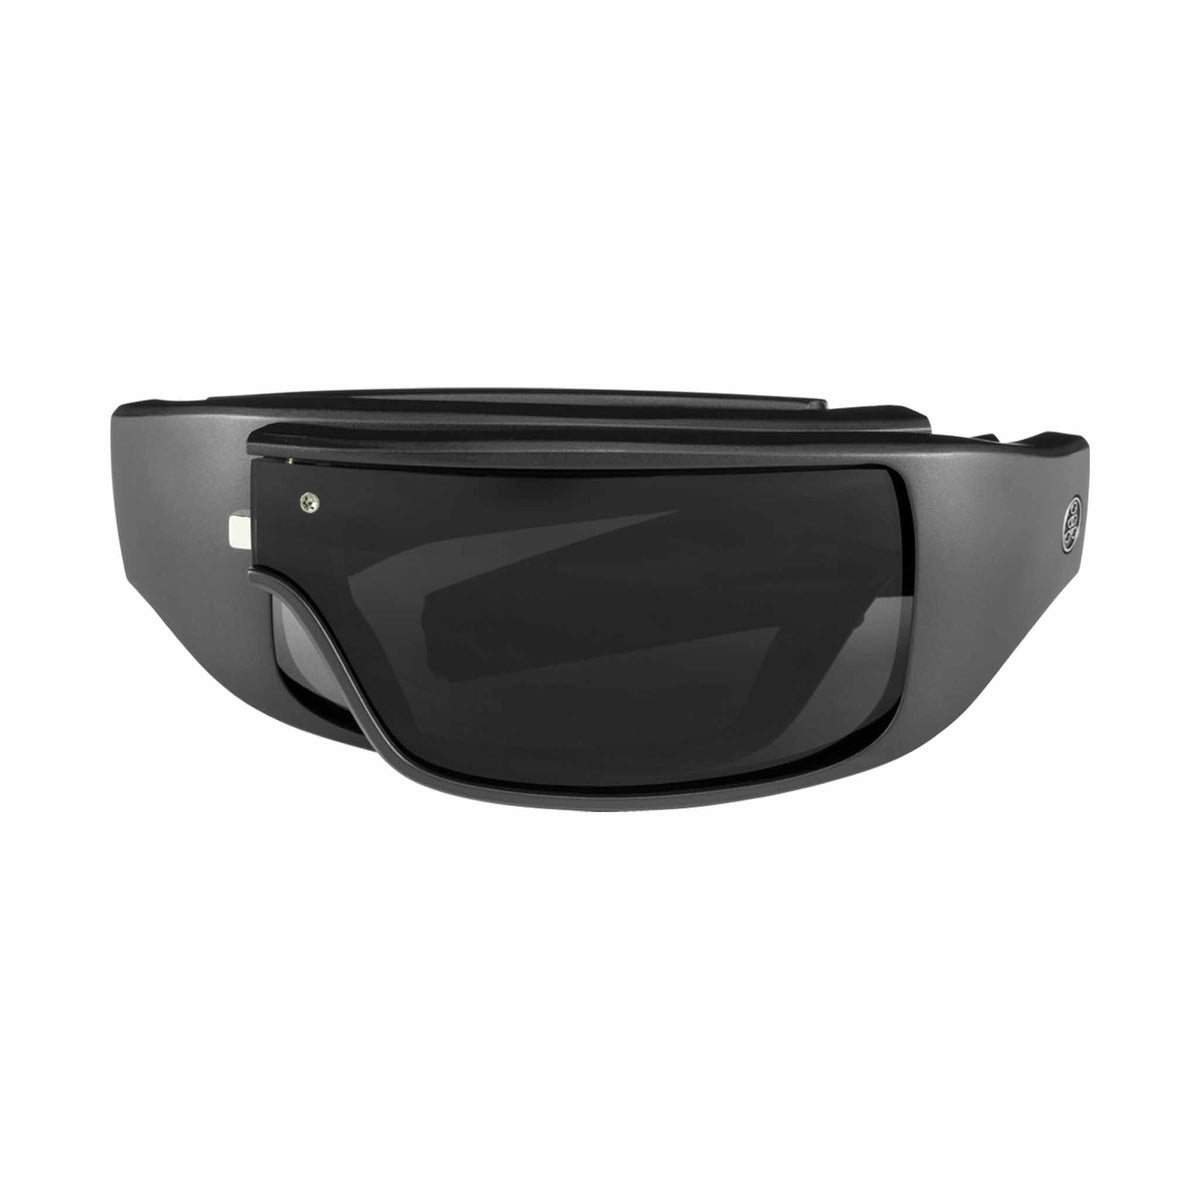 Popticals, Premium Compact Sunglasses, PopGear, 010050-BMGP, Polarized Sunglasses, Matte Black Frames, Gray Lenses, Compact View